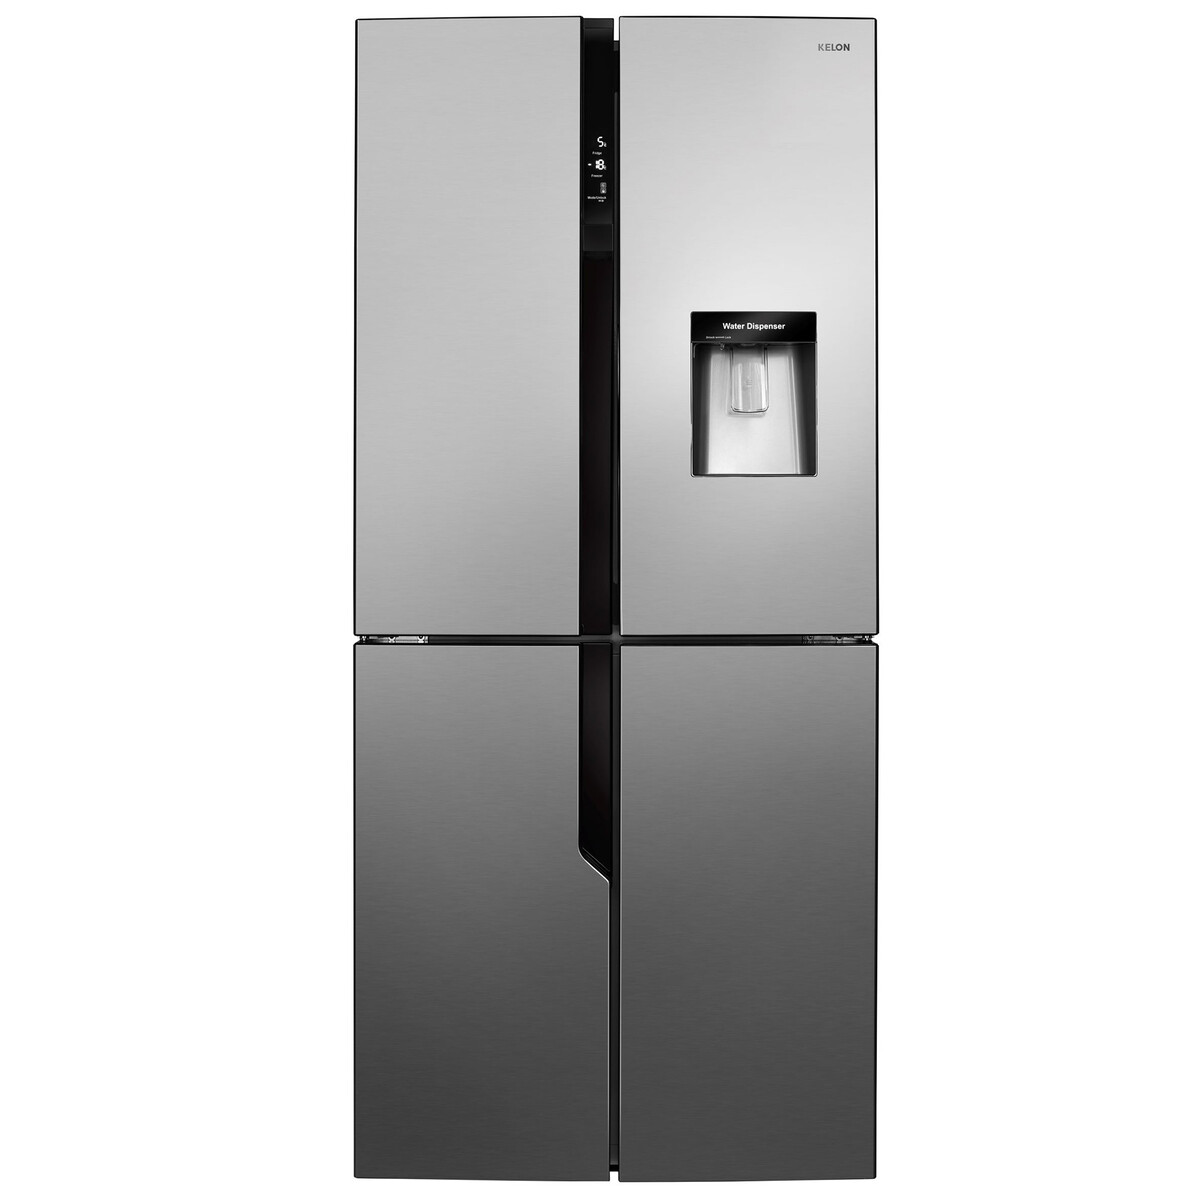 Kelon 4 Door Refrigerator,KRQ56WC-432Ltr